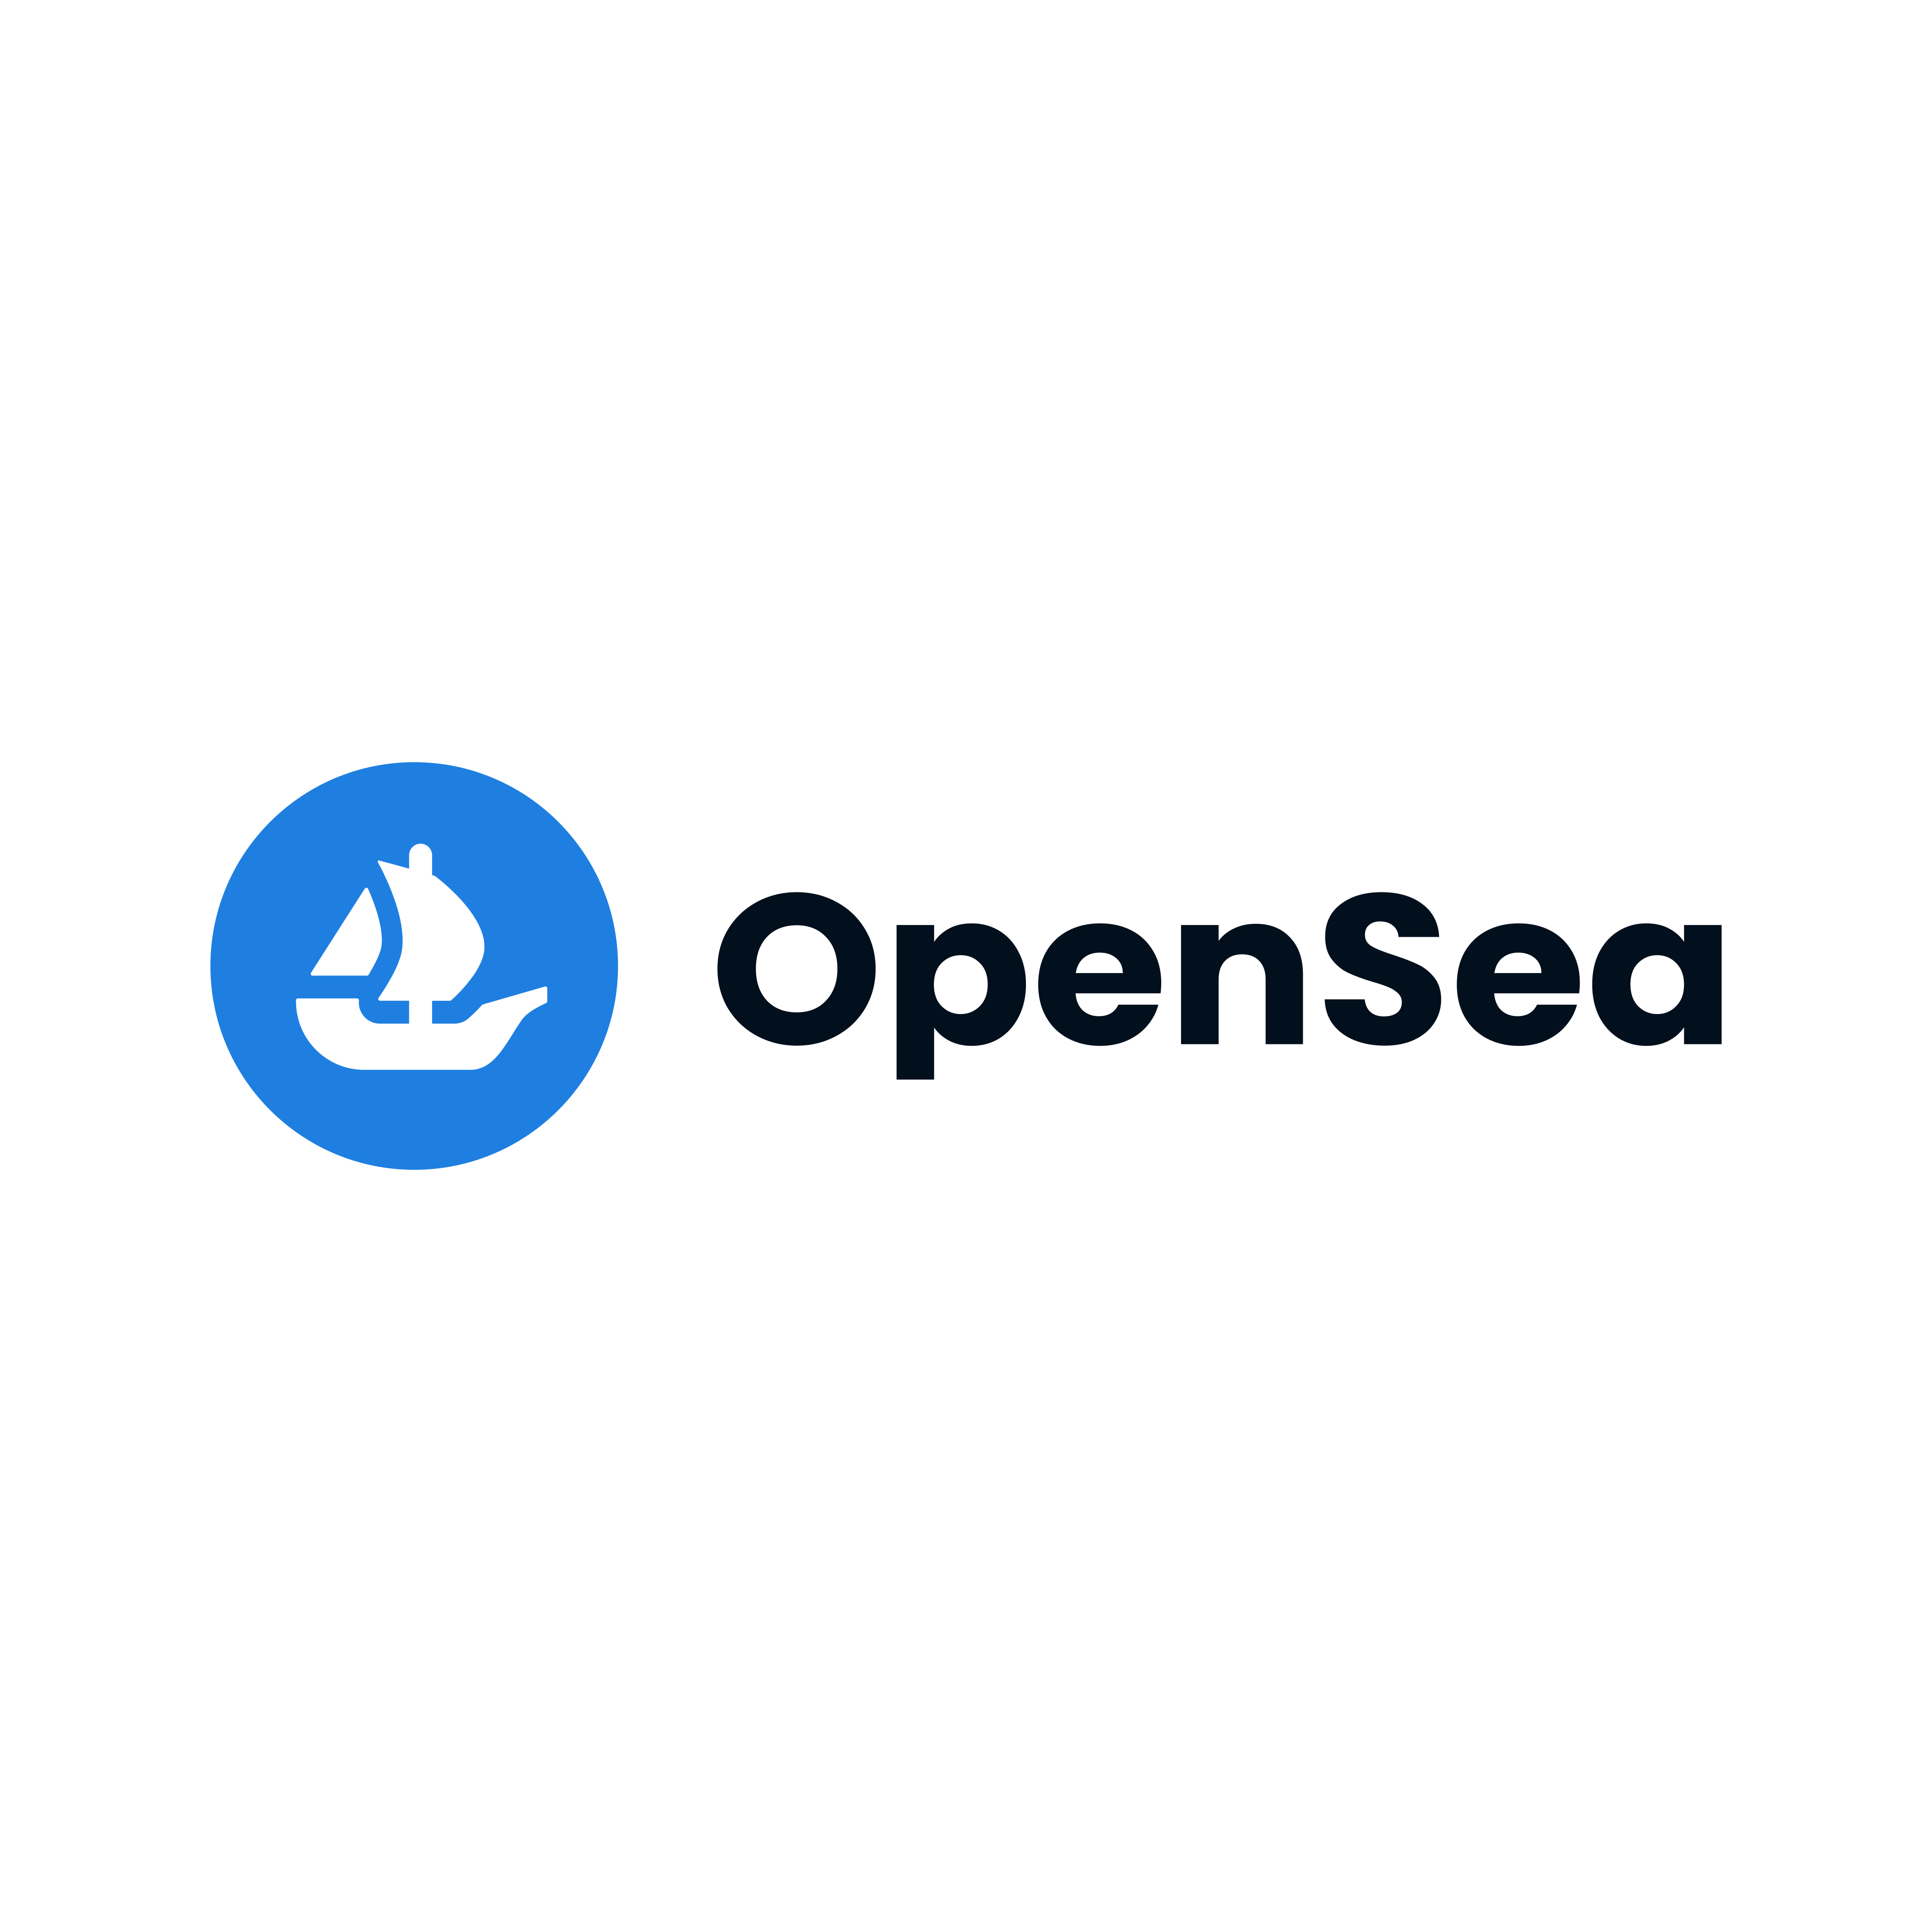 opensea logo 0 - OpenSea Logo